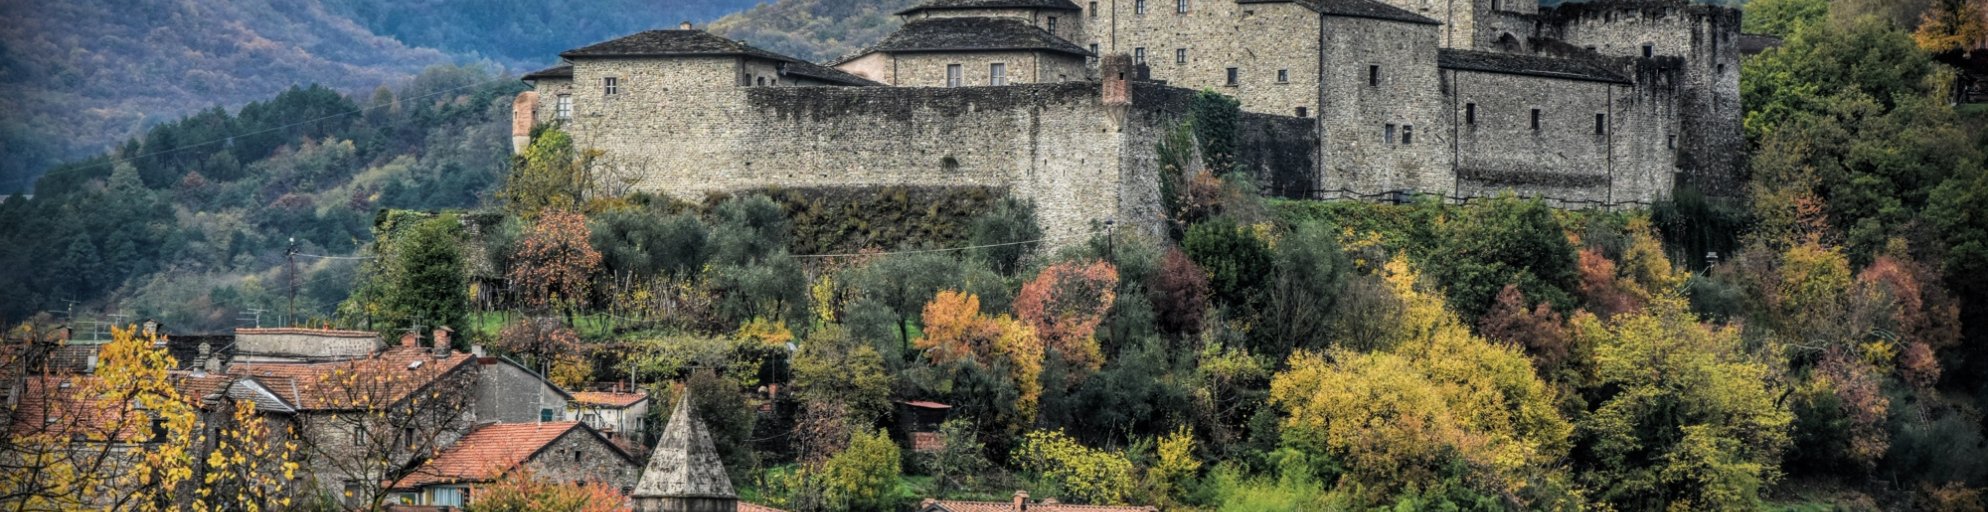 Burg Piagnaro in Pontremoli